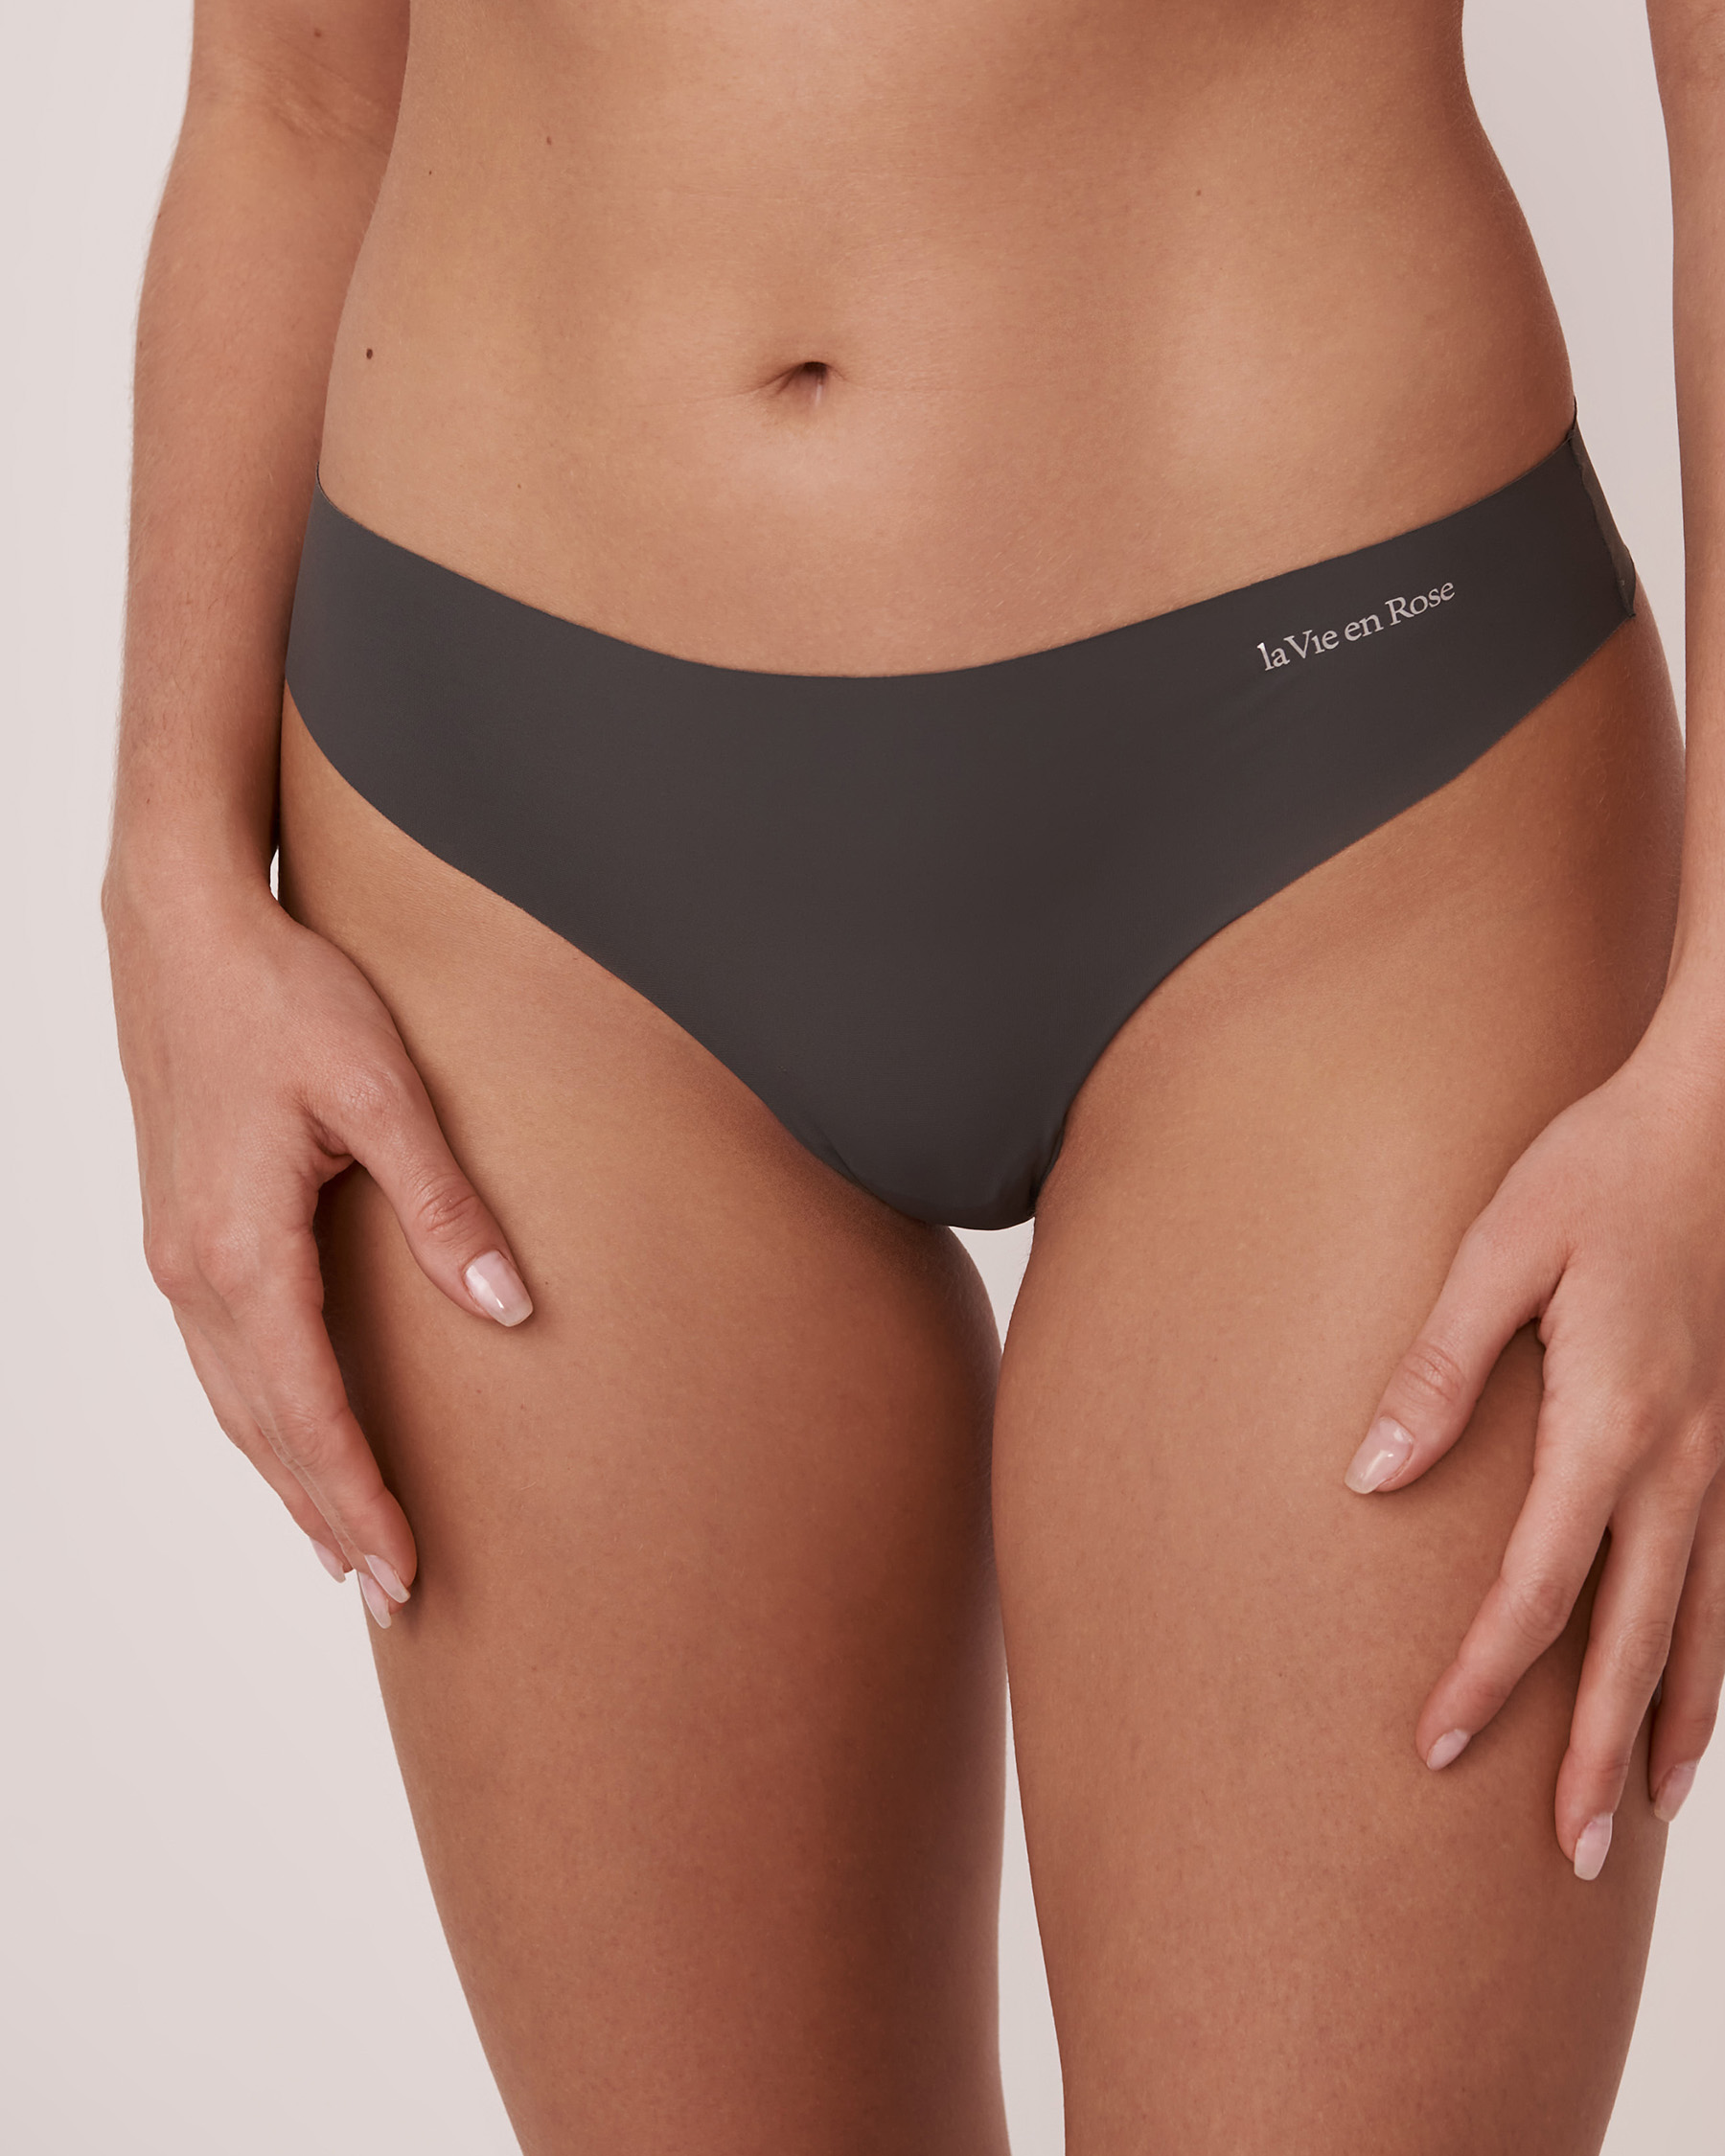 LA VIE EN ROSE Microfiber No-show Thong Panty Magnet 20200188 - View1